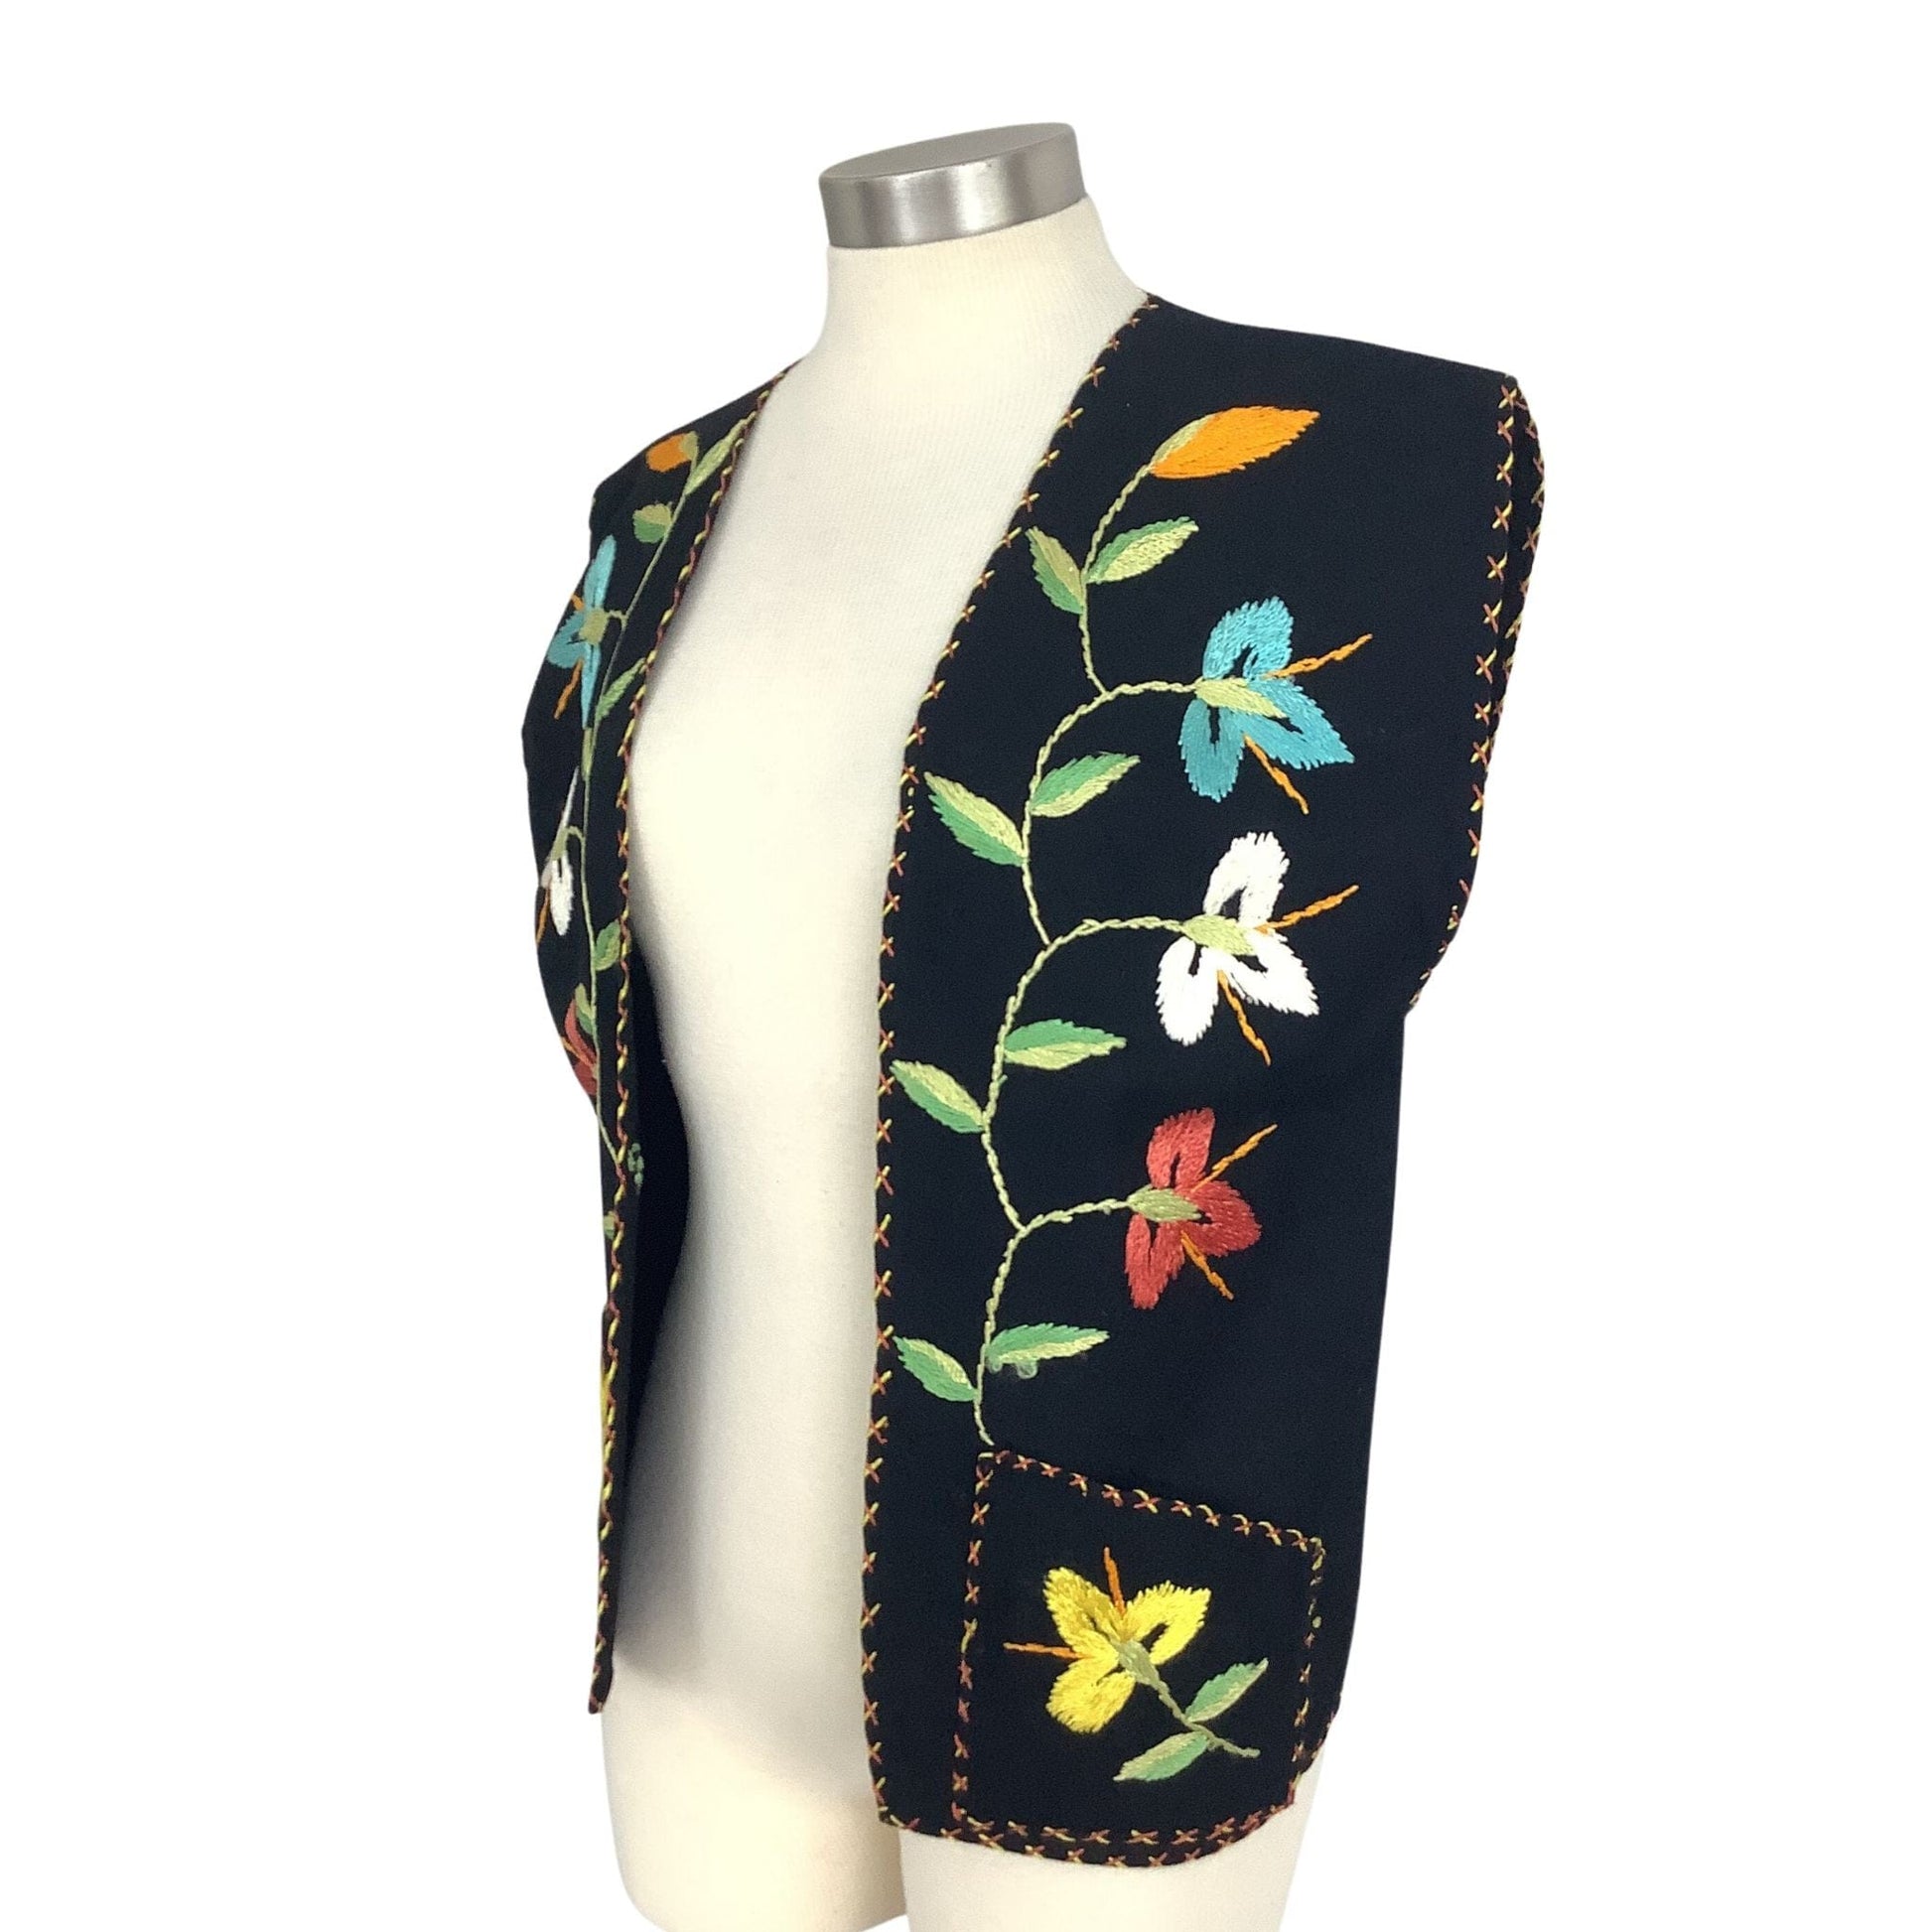 Ethnic Embroidered Vest Medium / Black / Vintage 1950s